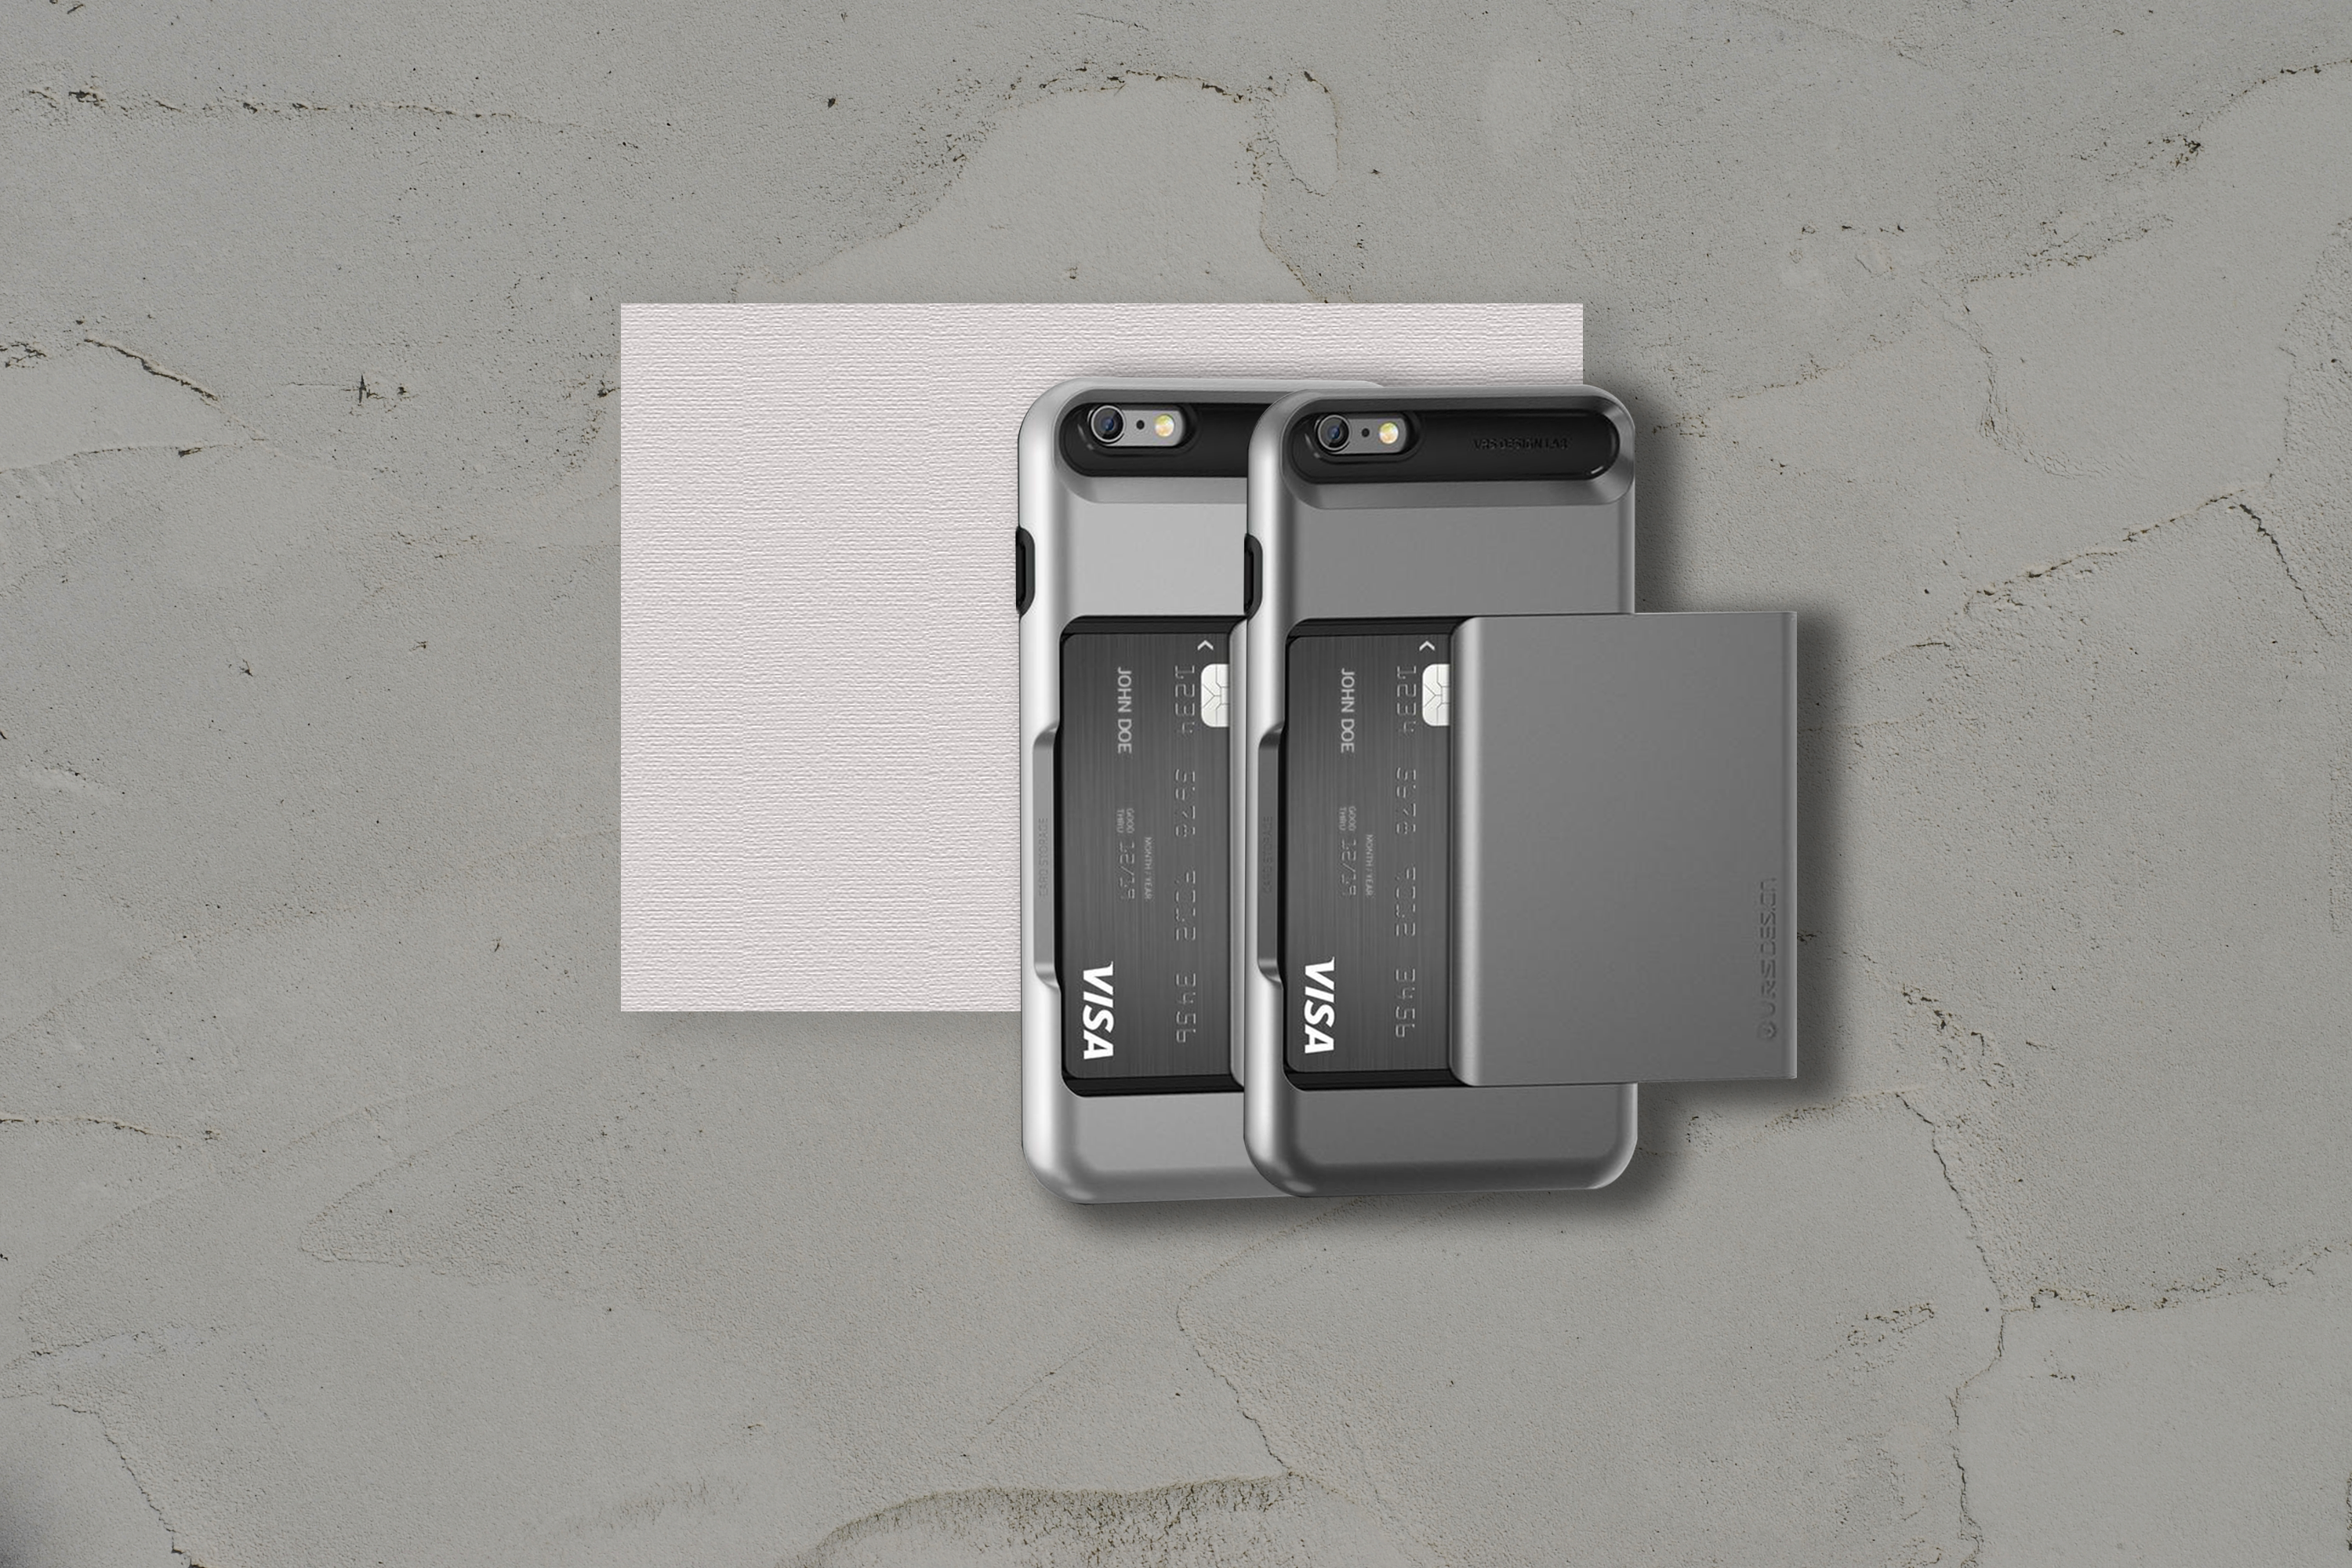  Compact iPhone 6/6s Plus Cases | VRS Design